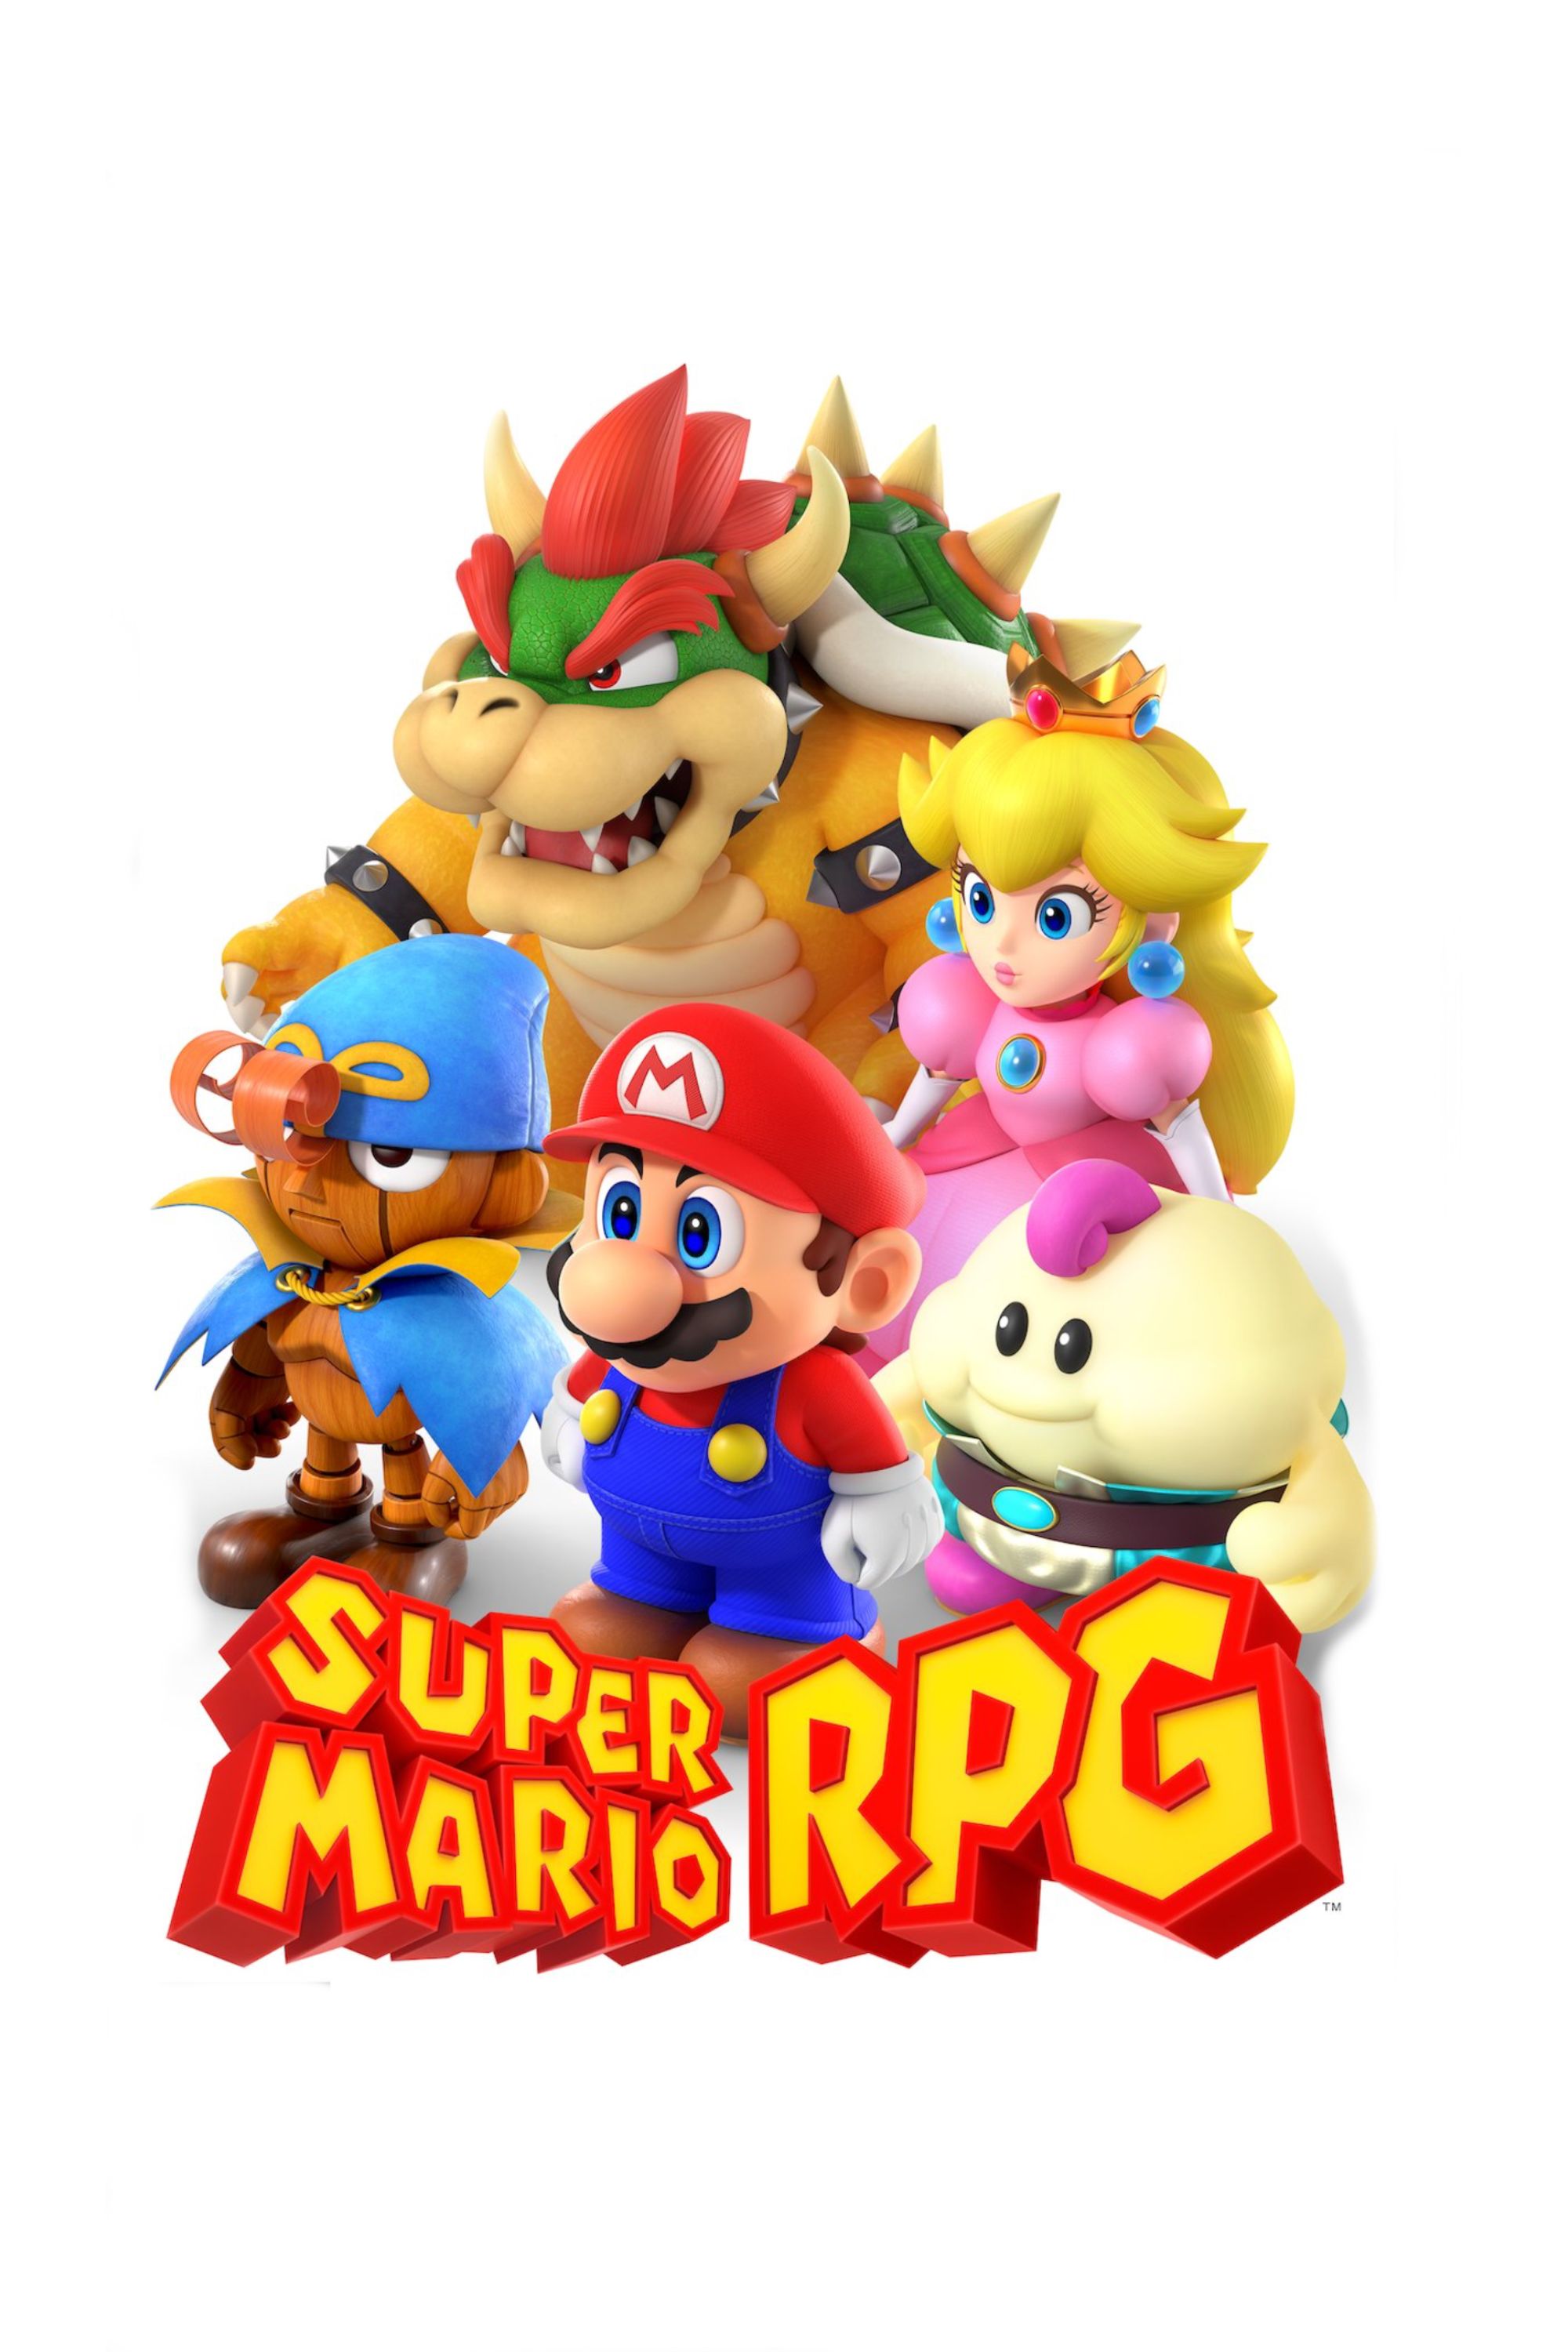 Super Mario RPG Remake Poster